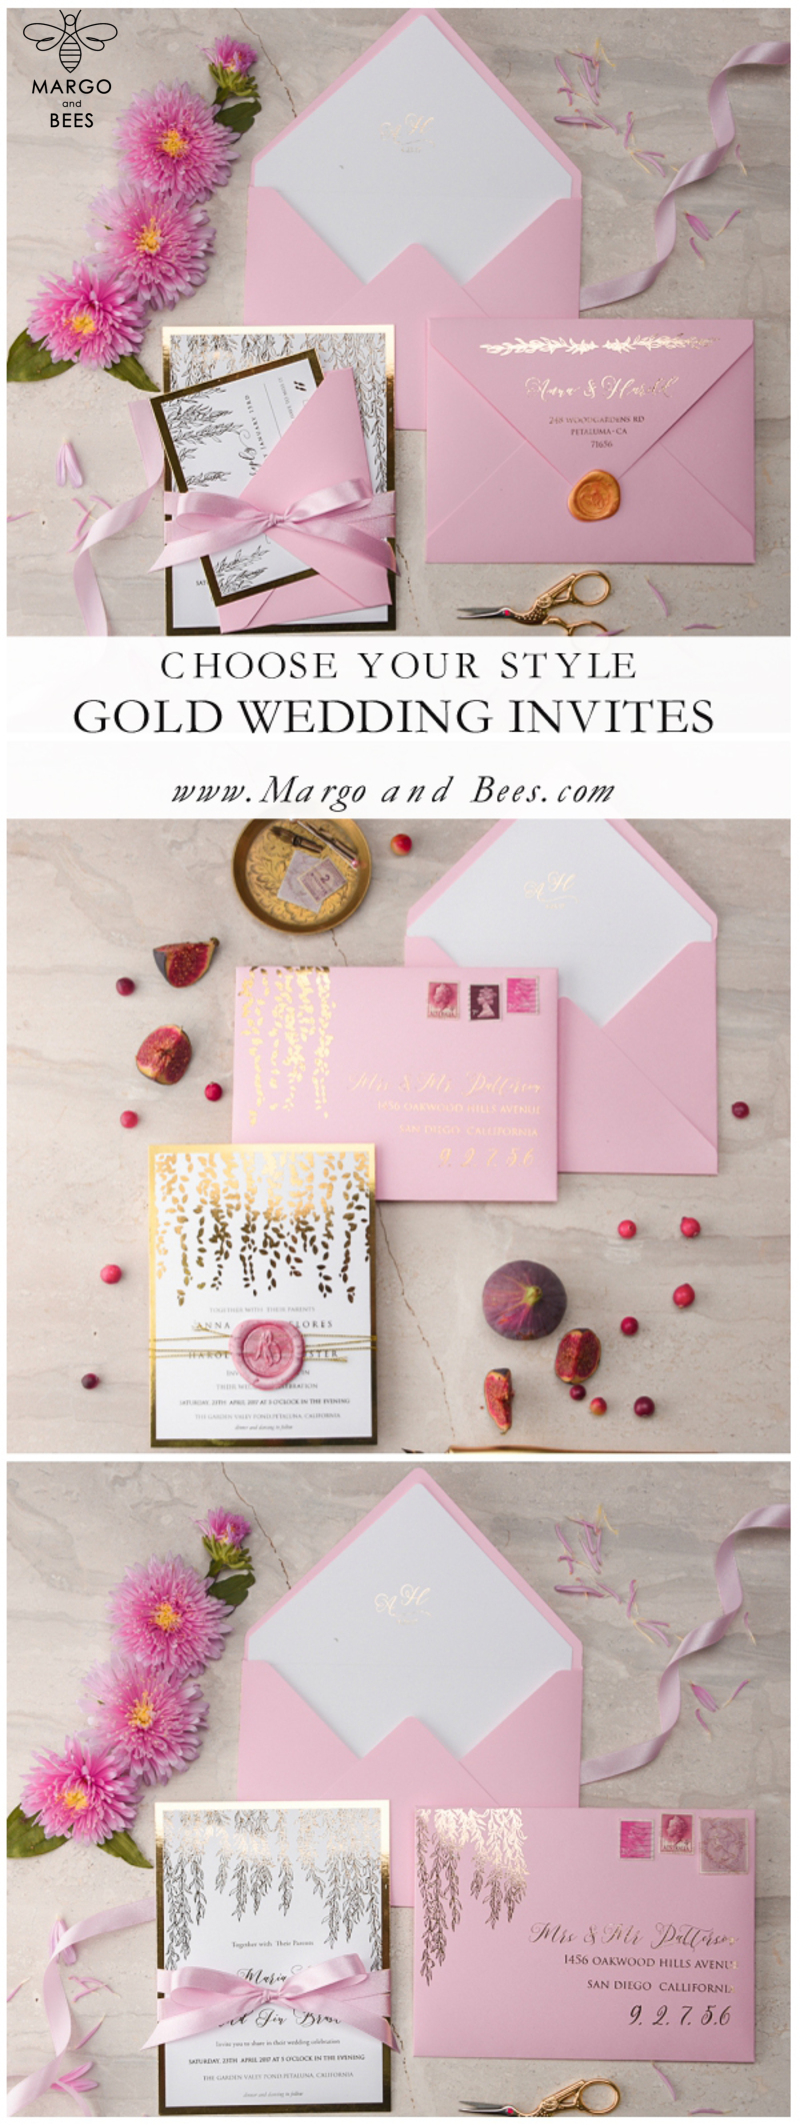 luxory wedding invitations, shiny glitter style invites, elegant romantic wedding invitation suite-9